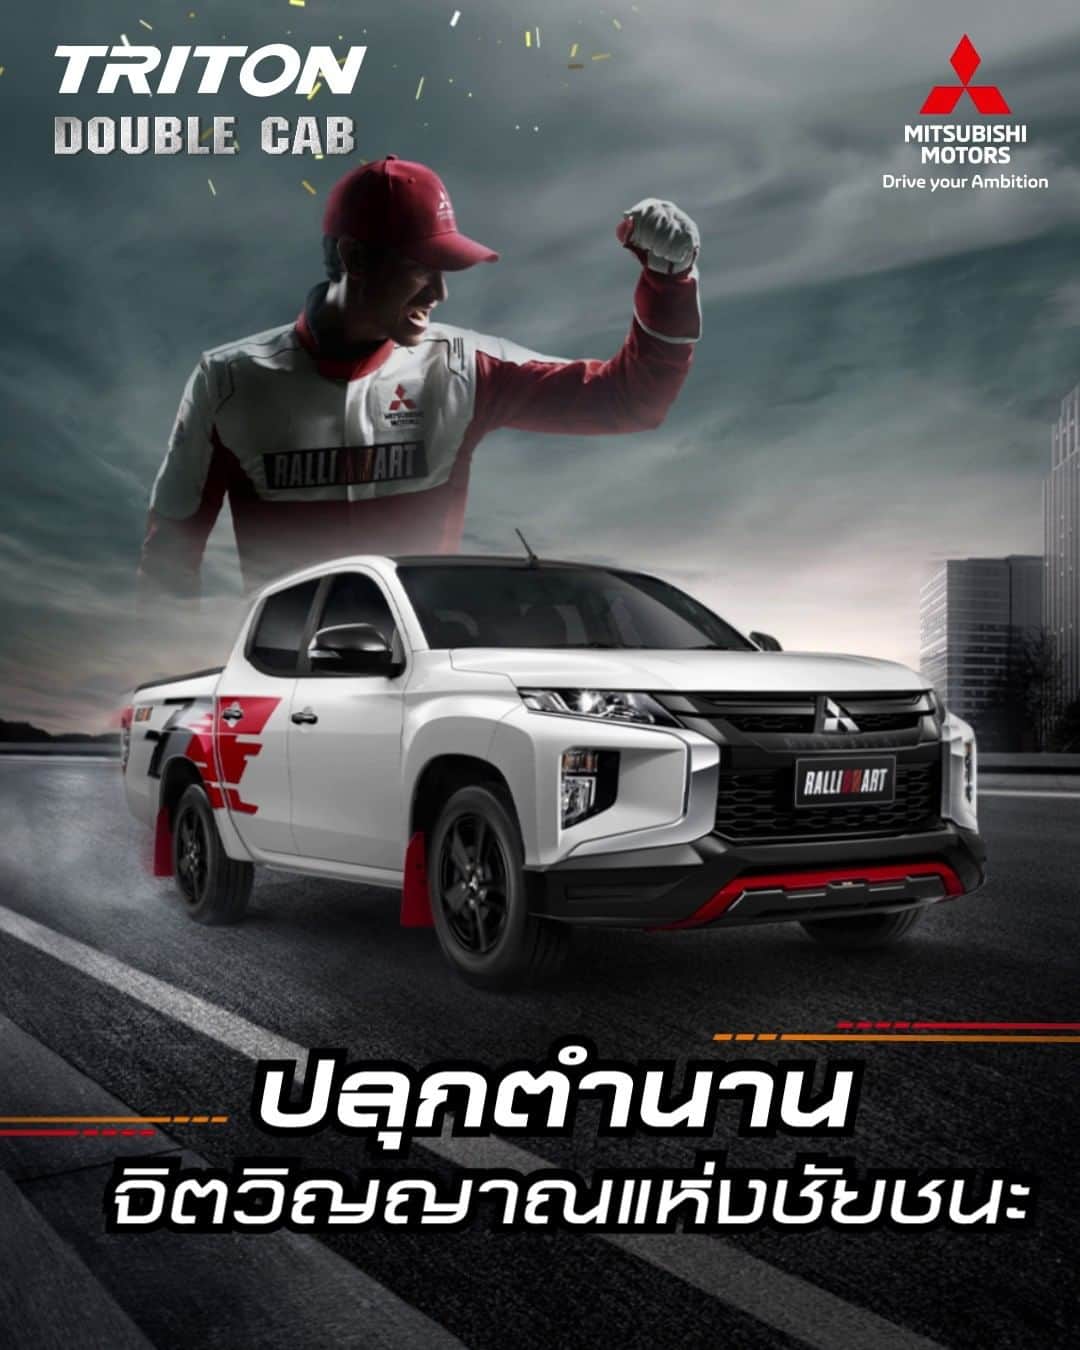 Mitsubishi Motors Thailandのインスタグラム：「ลุยแกร่งได้ดั่งแชมป์ ไปกับ "มิตซูบิชิ ไทรทัน แรลลี่อาร์ท รุ่นดับเบิ้ลแค็บ"  ด้วยสุดยอดเทคโนโลยีจากสนามแข่งสุดโหด ส่งต่อความแกร่งสู่ทุกการใช้งานจริง ที่มาพร้อมดีไซน์การออกแบบแรงบันดาลใจจากรถแข่งแรลลี่ จุดเริ่มต้นการขับขี่ที่เร้าใจ ปลุกตำนานจิตวิญญาณแห่งชัยชนะในตัวคุณ พร้อมให้คุณเป็นเจ้าของแล้ว วันนี้ที่โชว์รูมทั่วประเทศ  #RALLIART  #MitsubishiMotorsThailand」